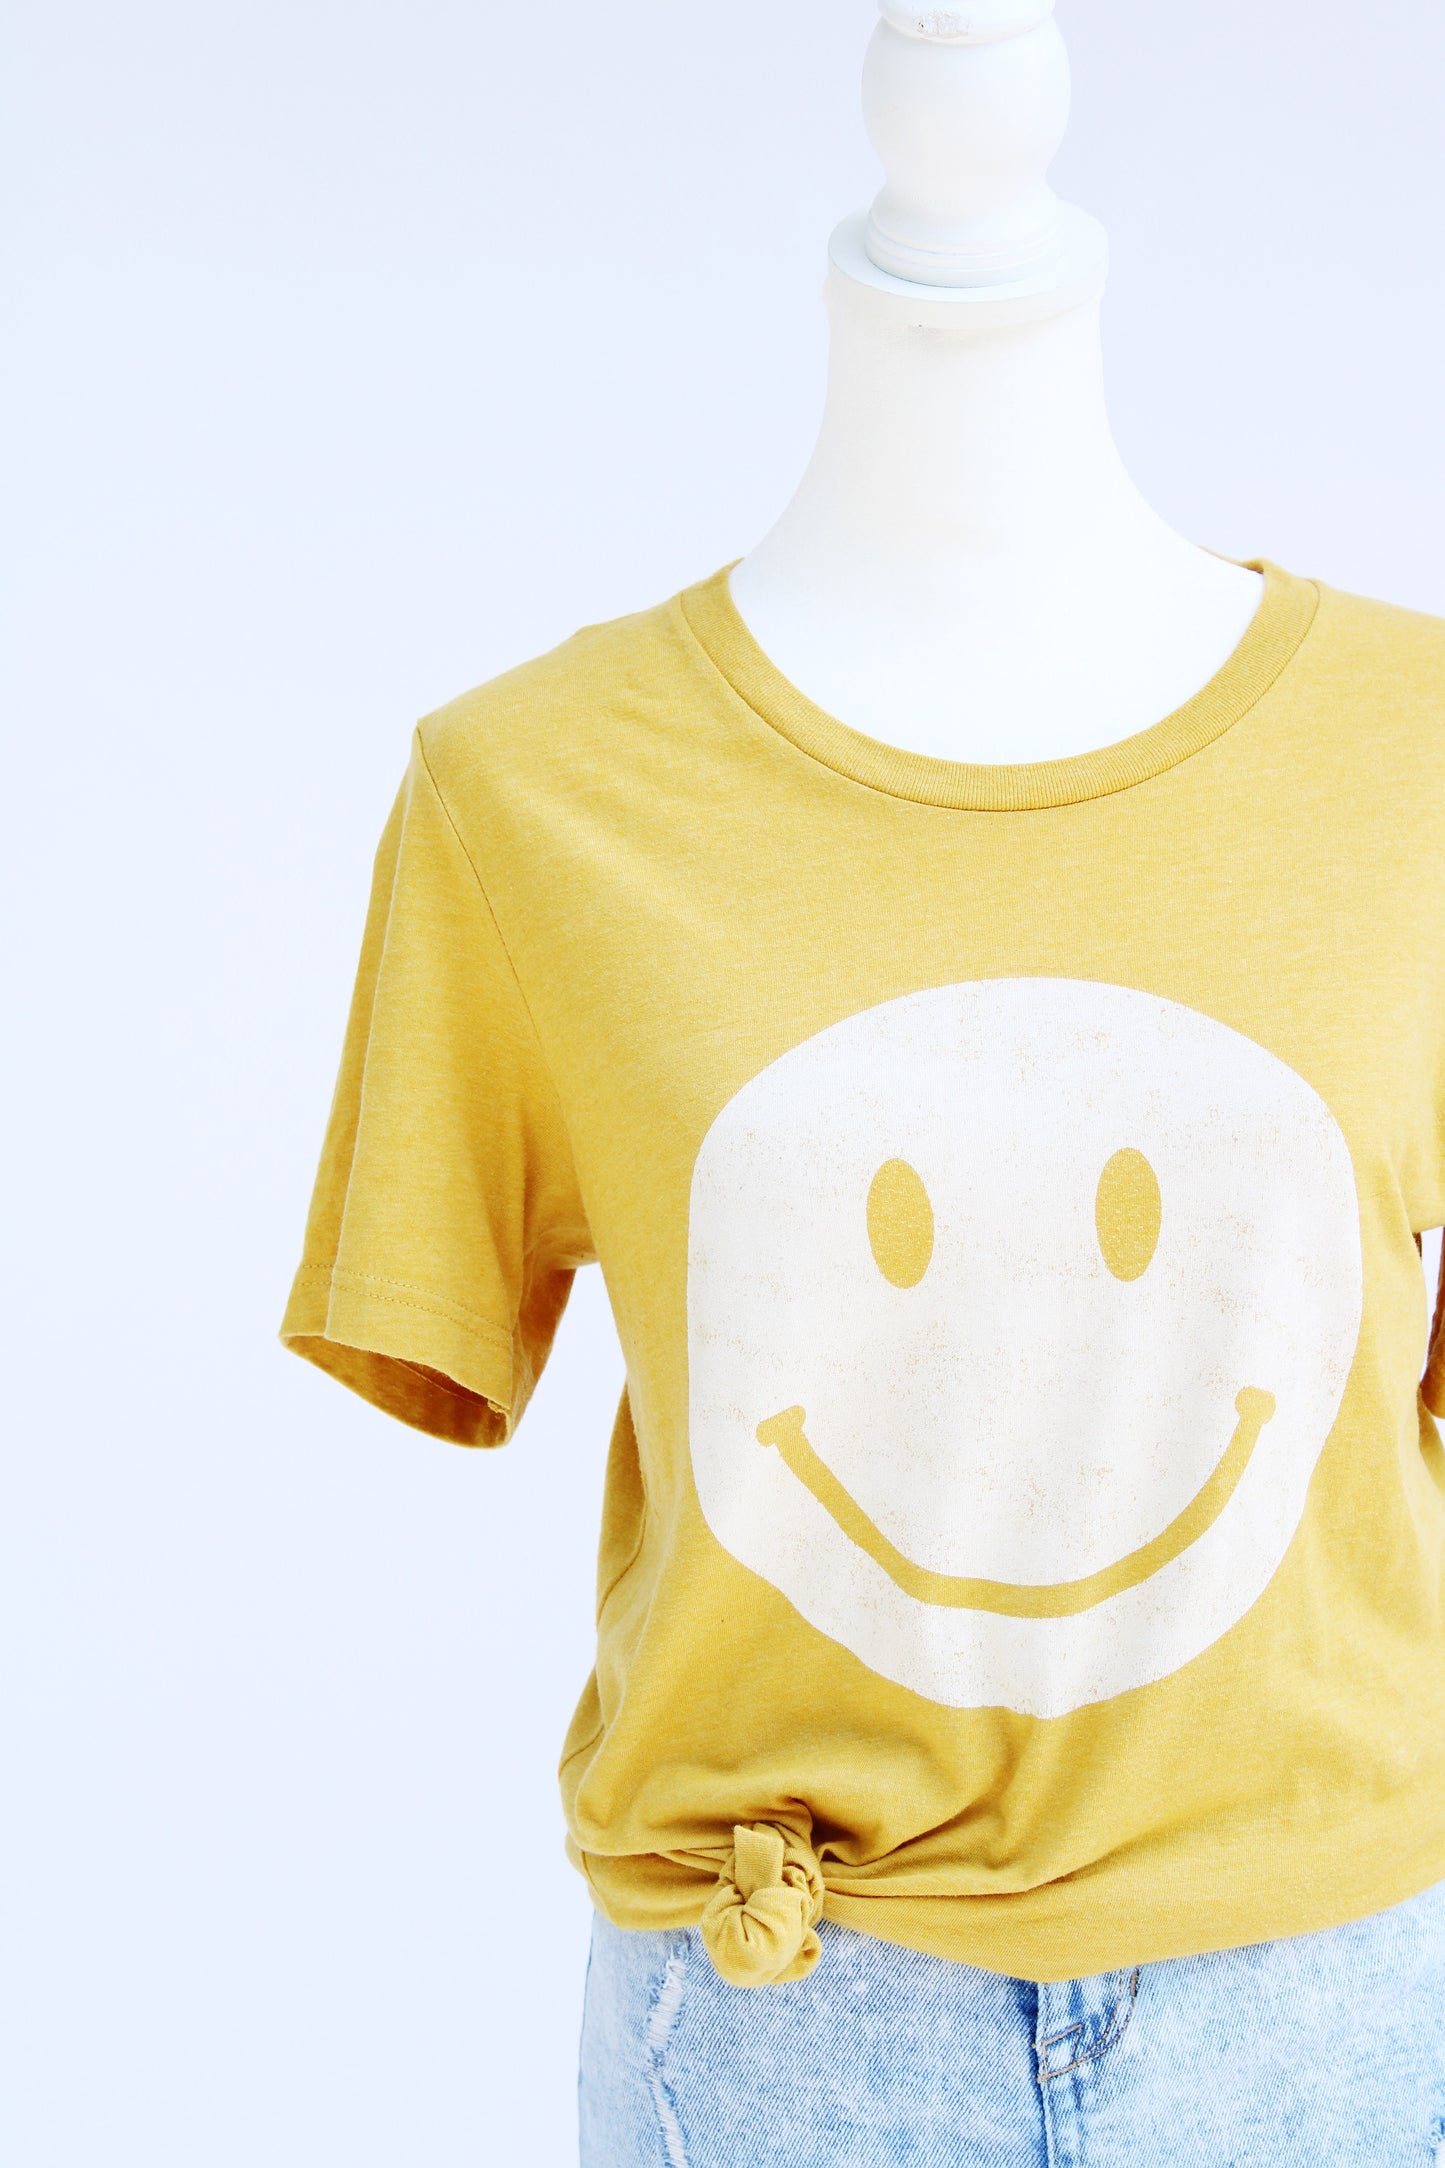 Sunshine Yellow Smiley Tee Shirt